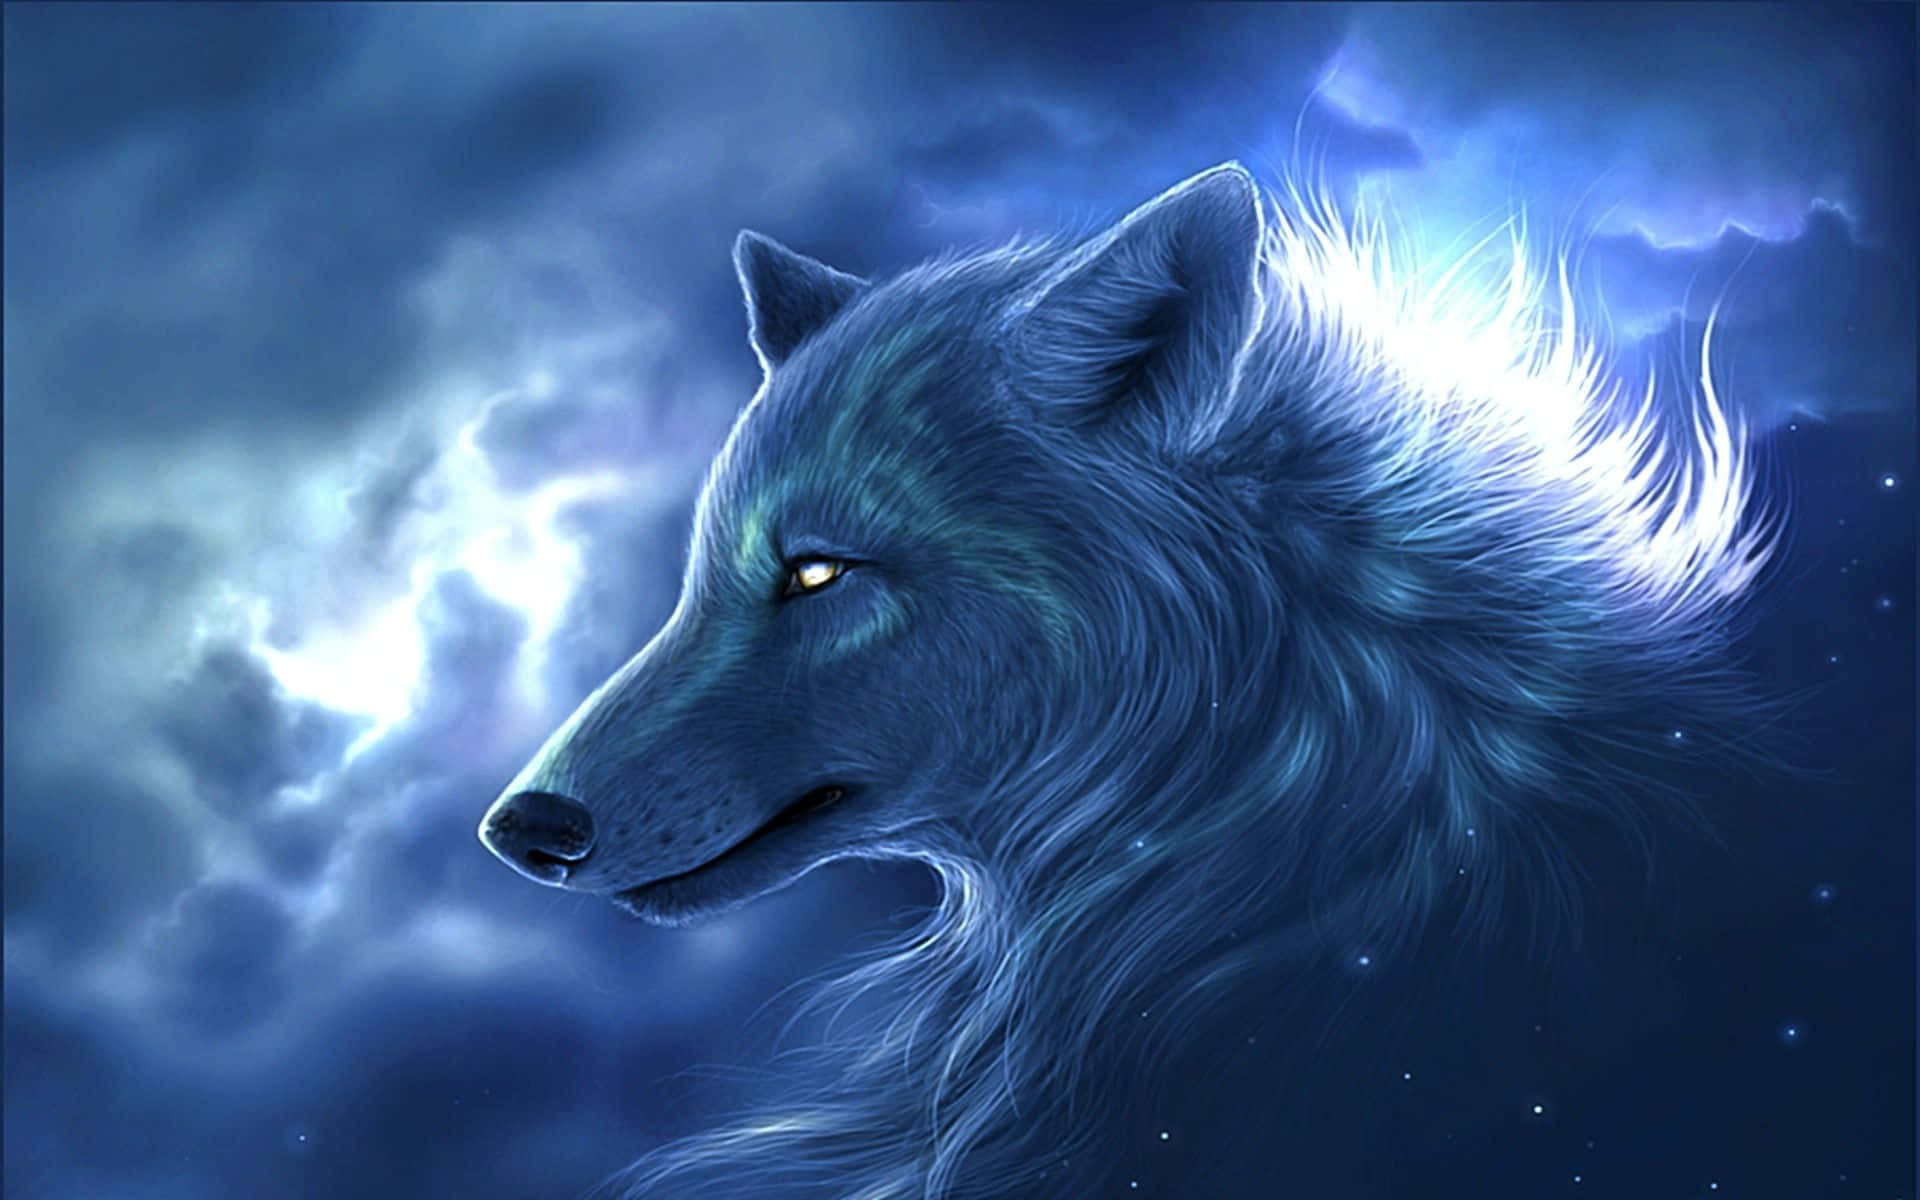 A fierce and majestic anime wolf in full regalia Wallpaper